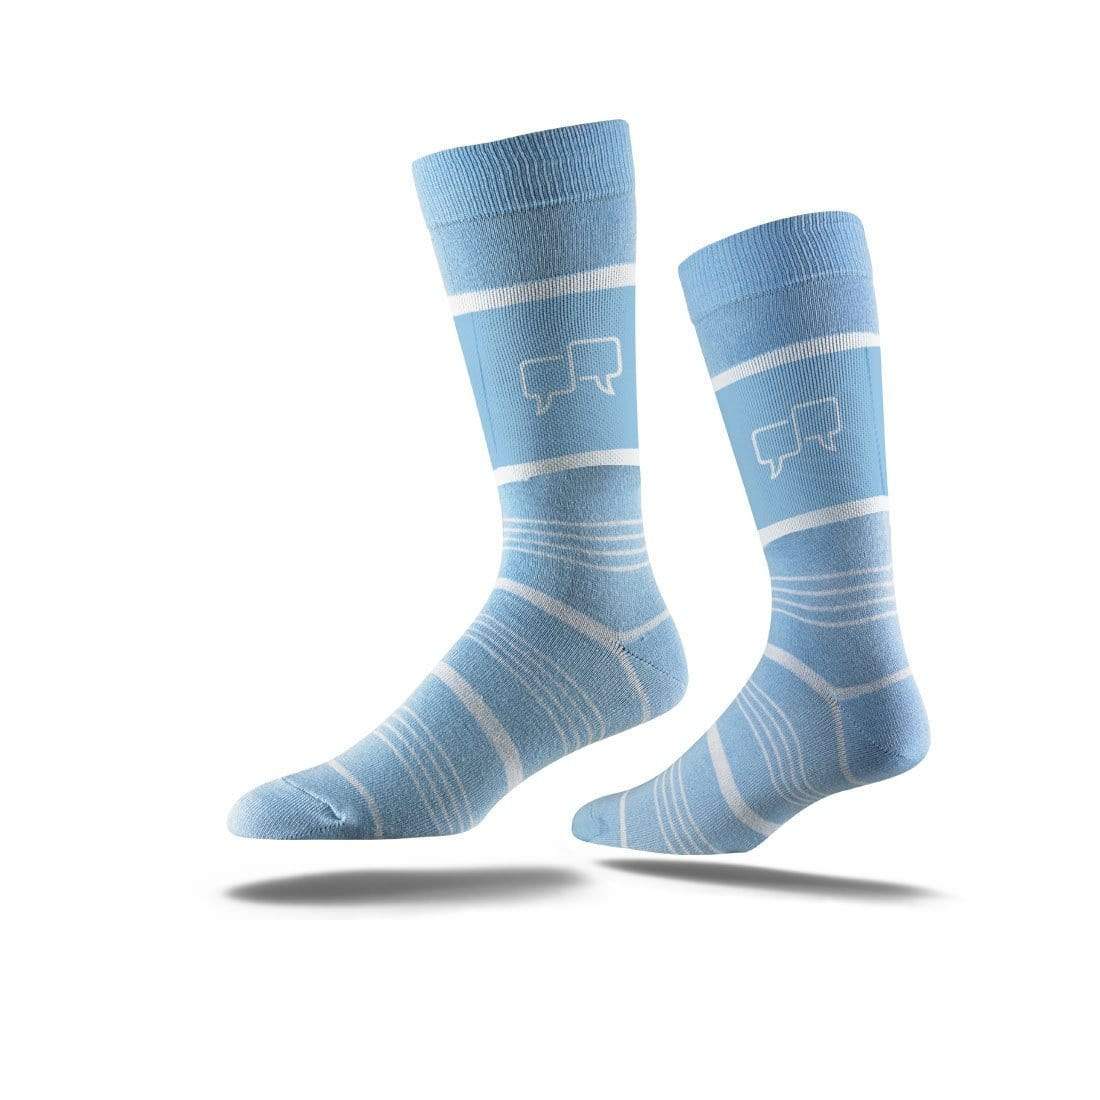 Carolina Custom Custom Printed Business Sock